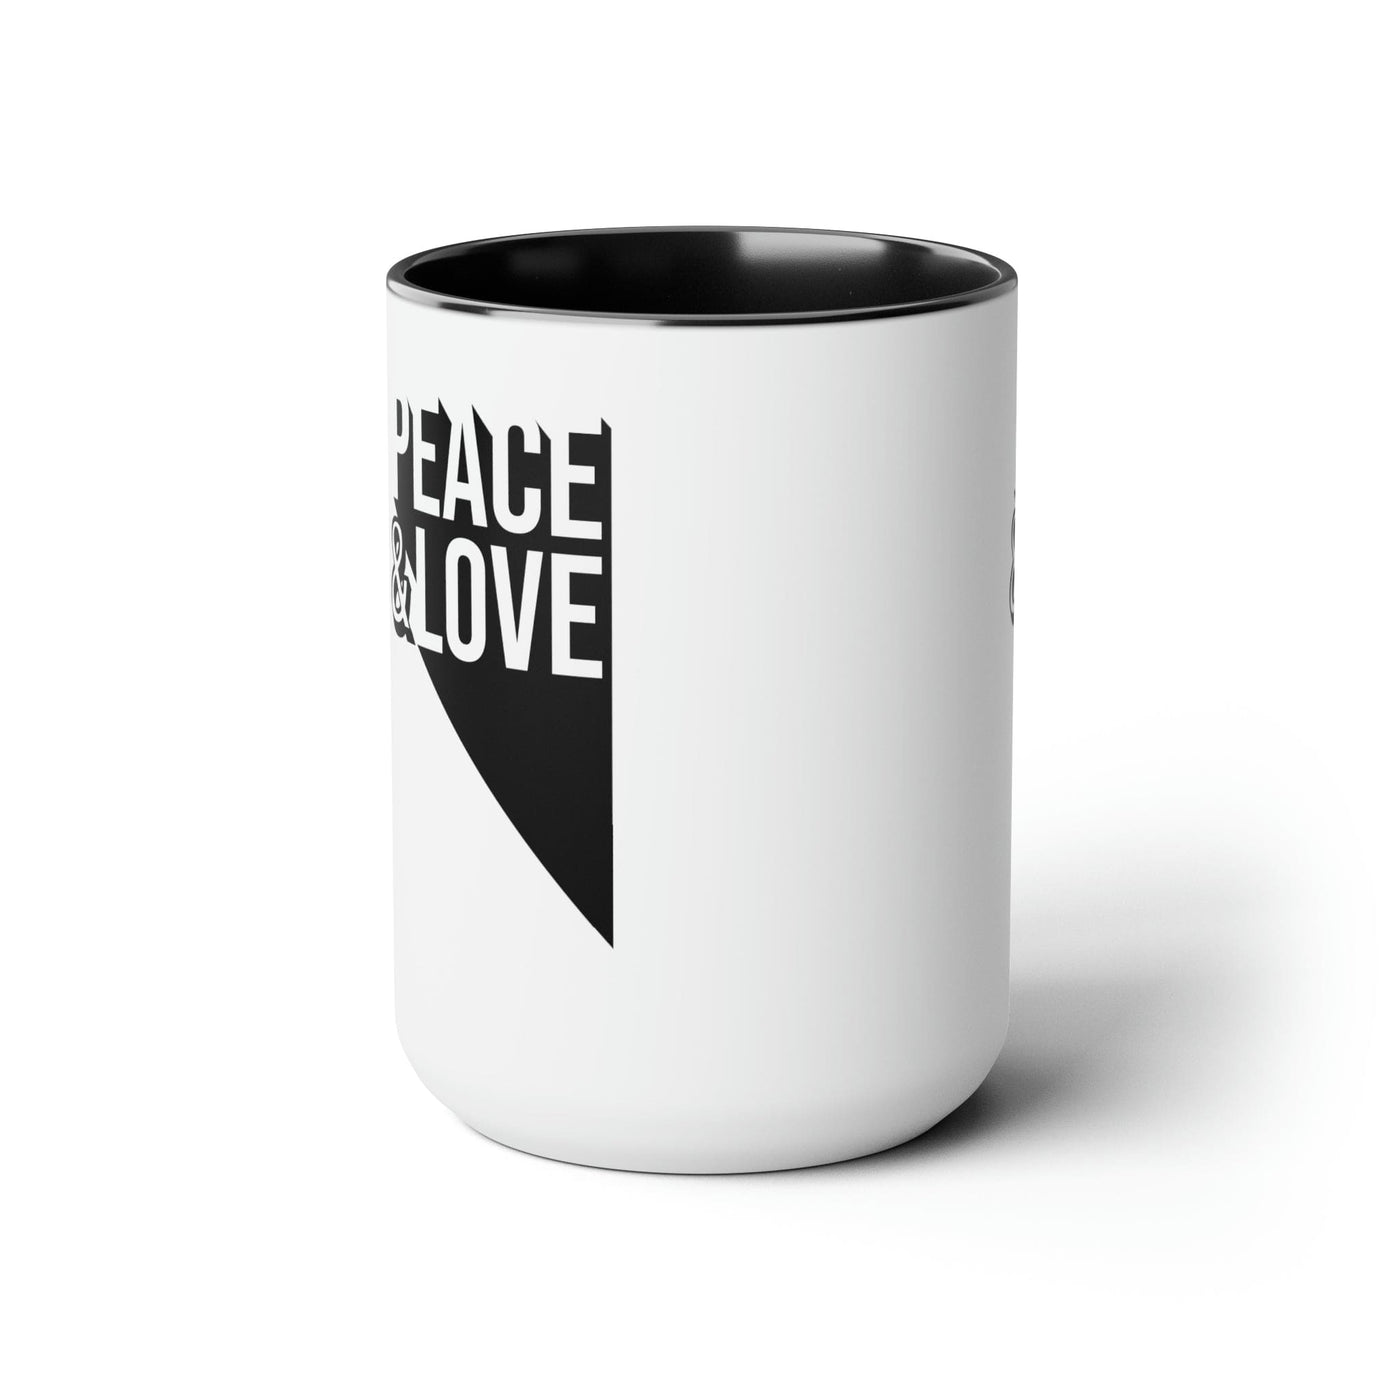 Accent Ceramic Coffee Mug 15oz - Peace And Love Duo Illustration - Decorative |